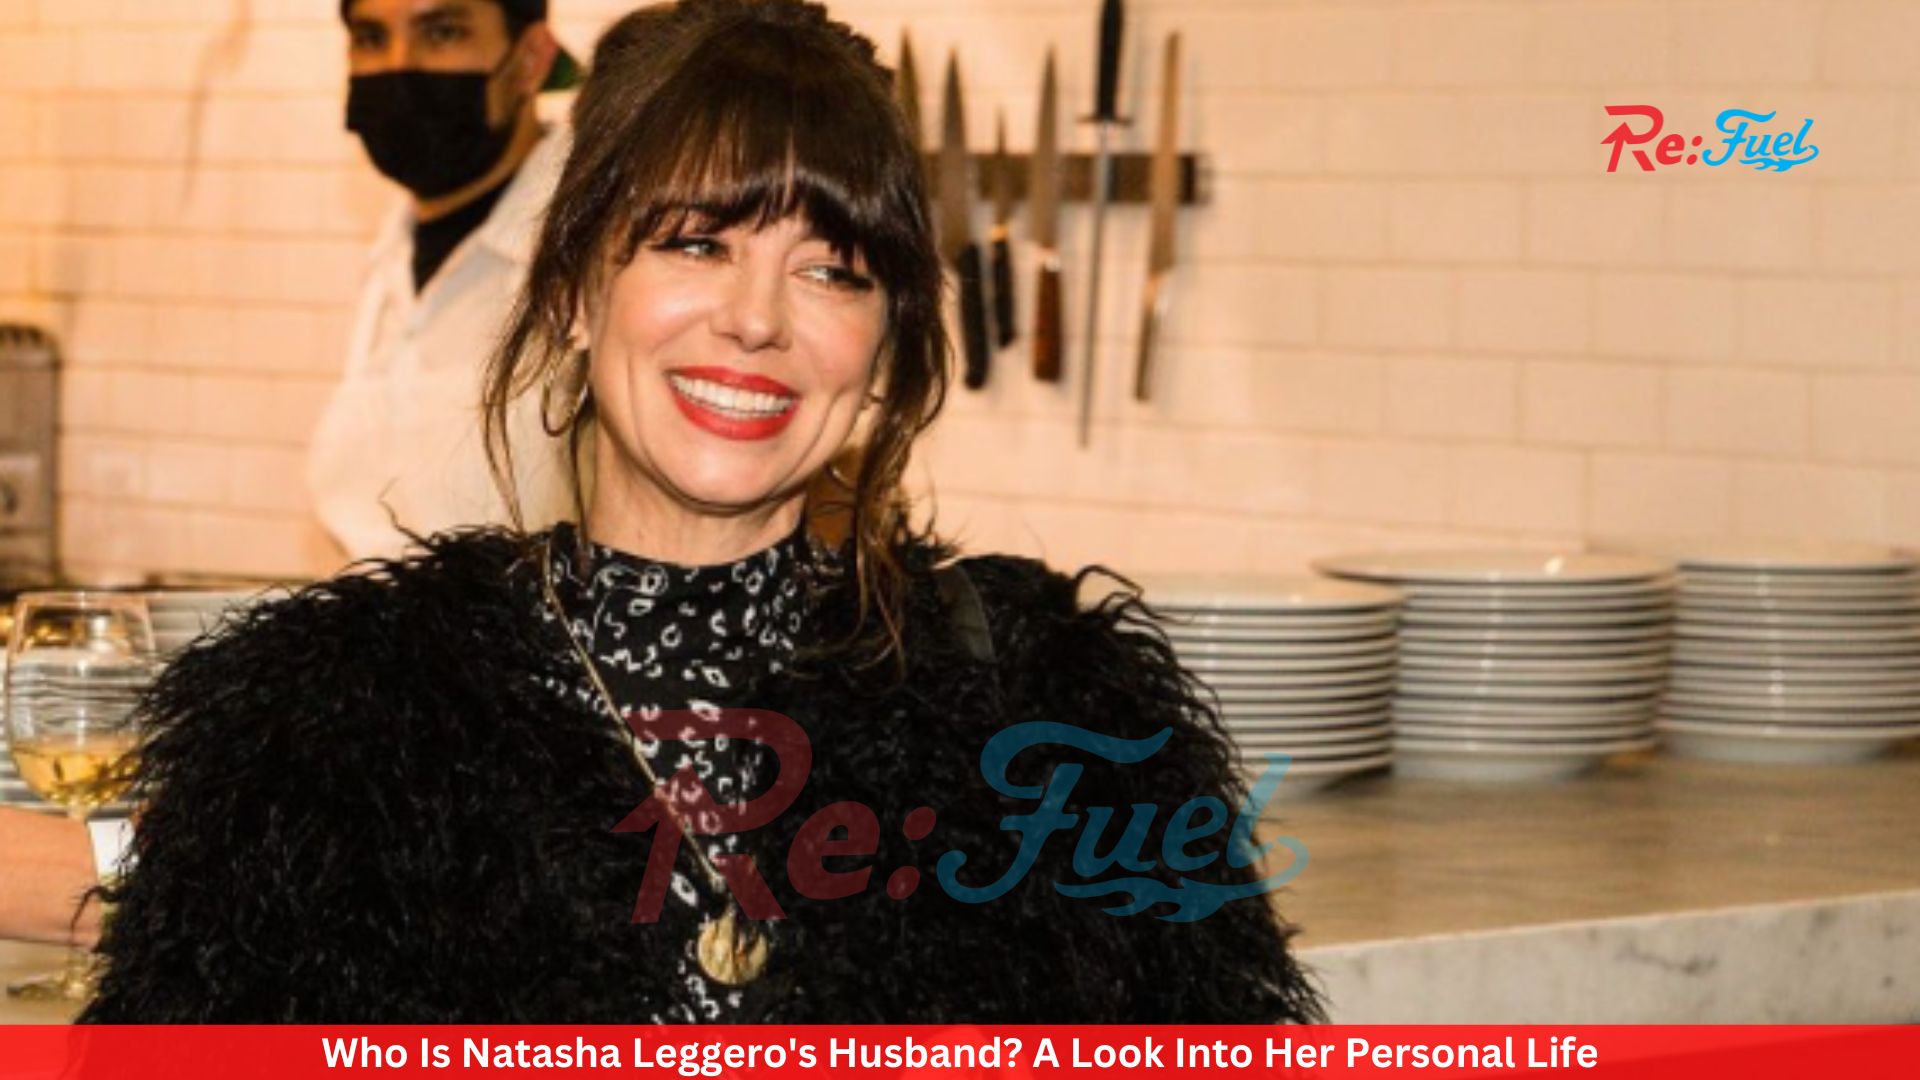 Who Is Natasha Leggero's Husband? A Look Into Her Personal Life